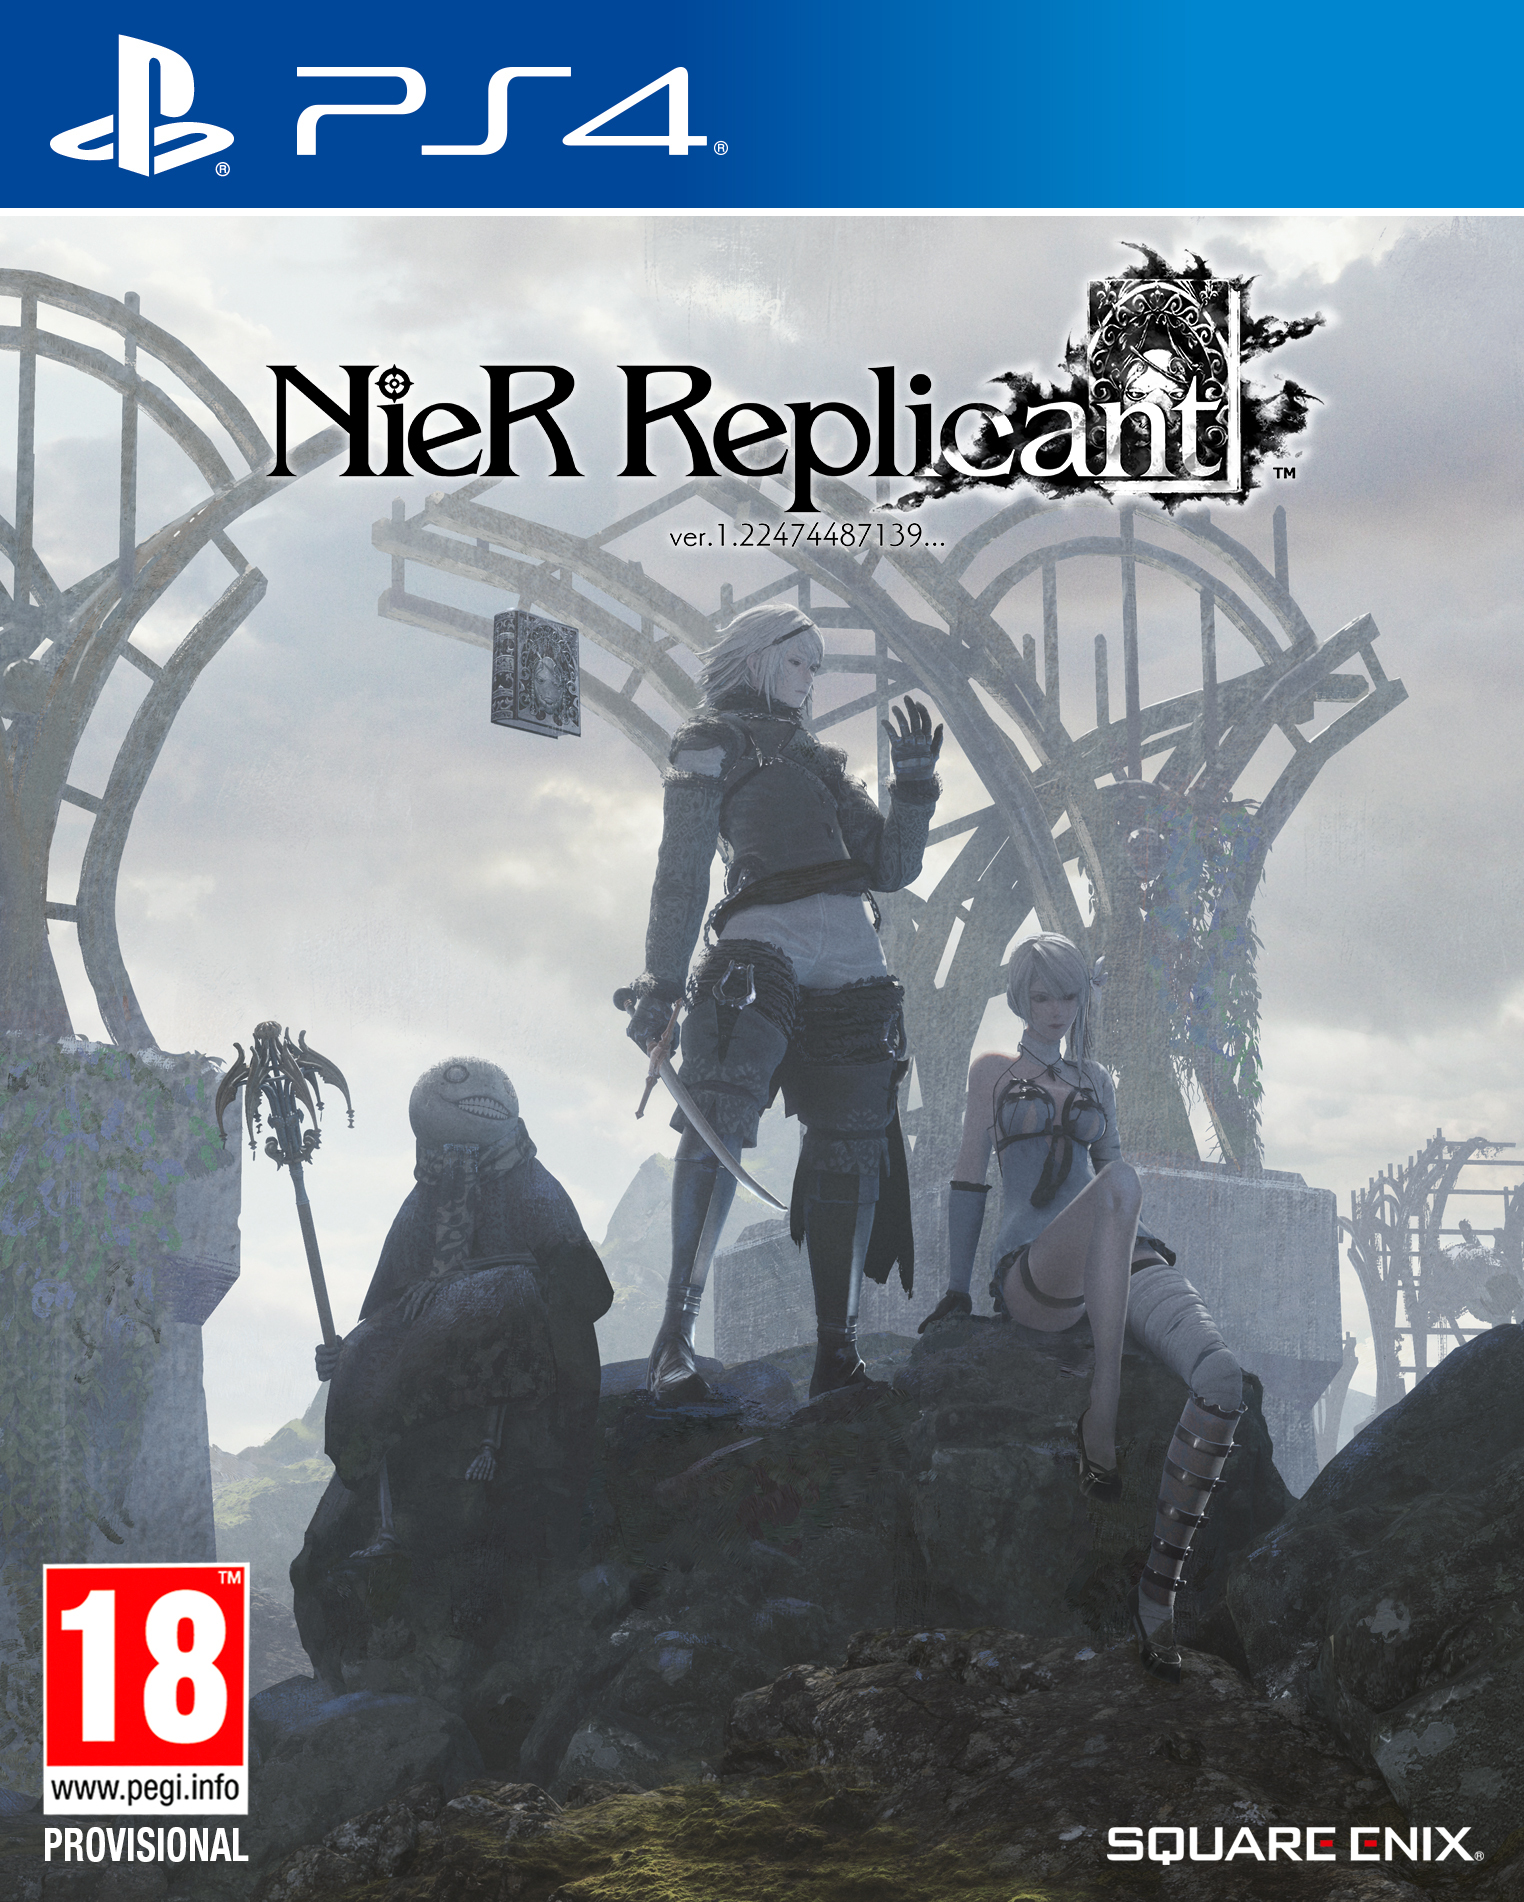 Square Enix NieR Replicant ver.1.22474487139 PlayStation 4